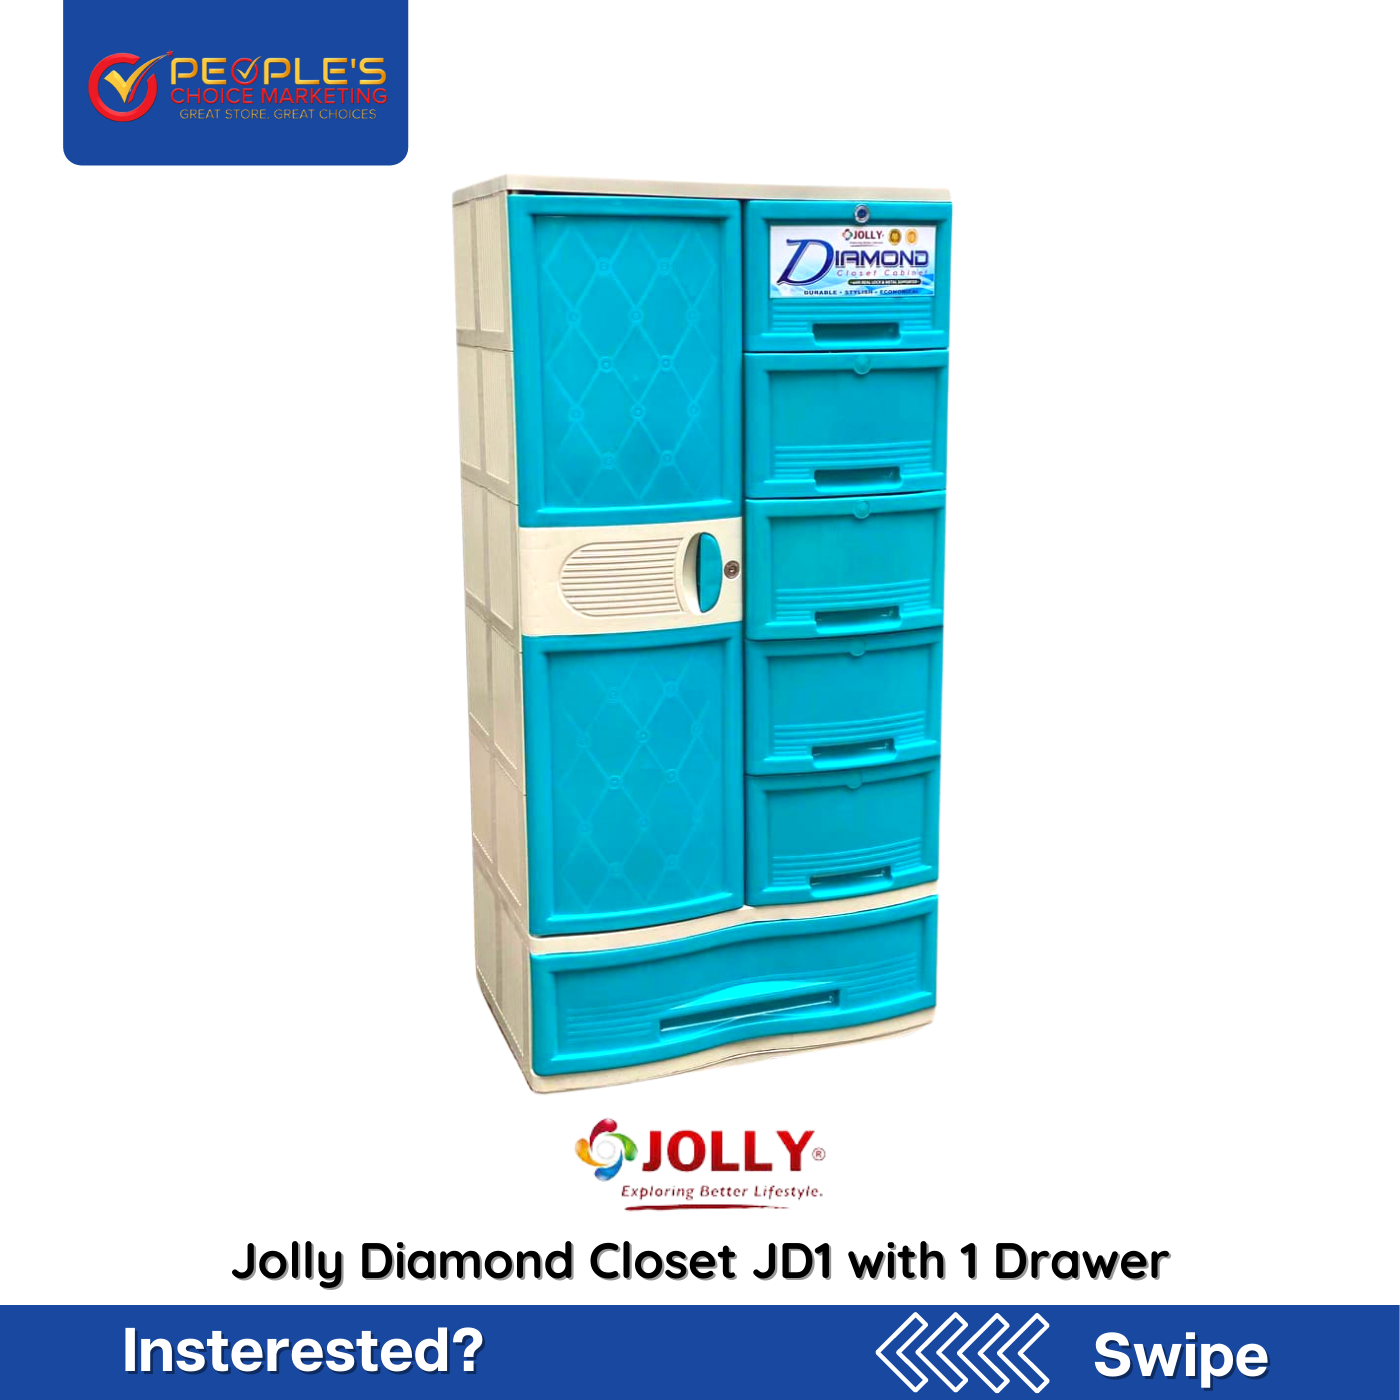 Buy 1 Get 1 Jolly Diamond Closet with 1 Drawer - People's Choice Marketing